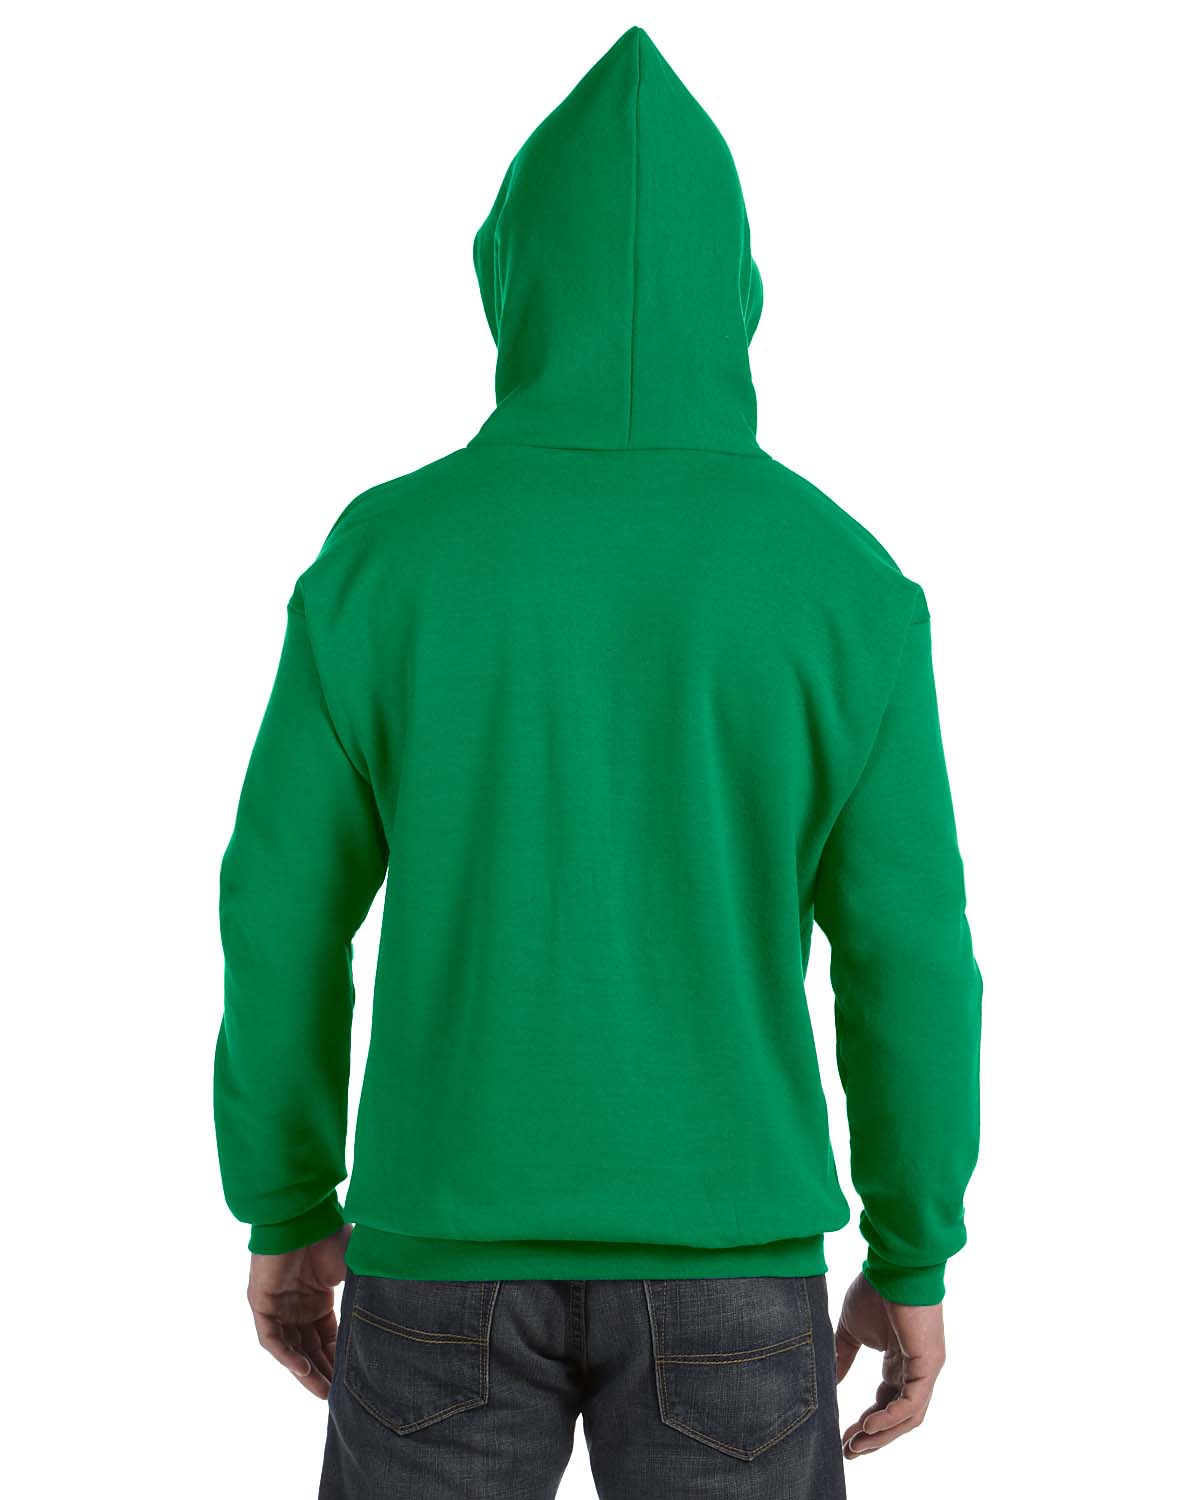 'Hanes P170 EcoSmar Pullover Hooded Sweatshirt'